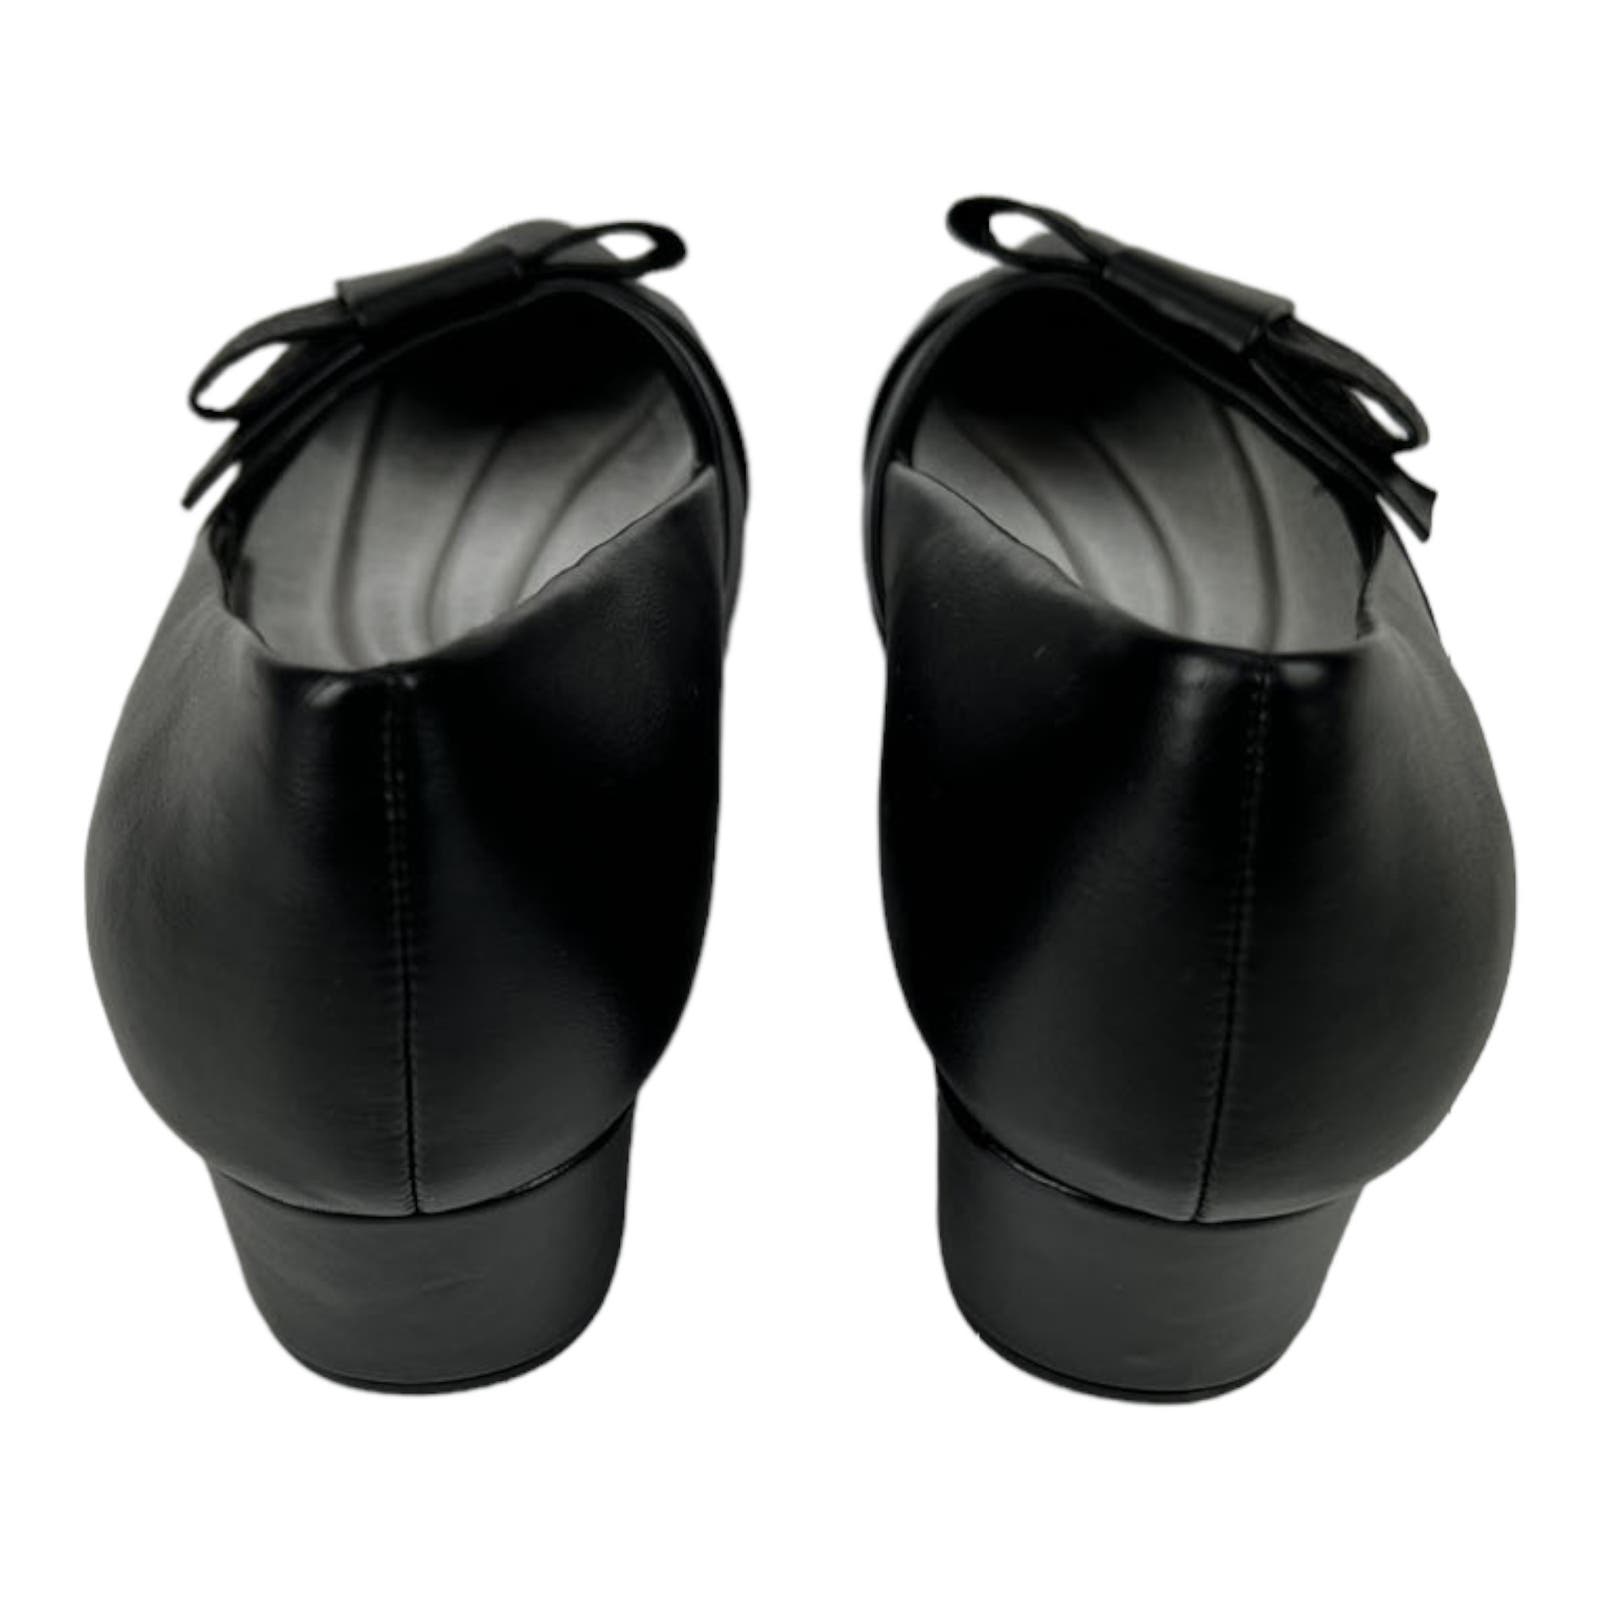 Easy Street Women US 6.5 Black Shoes Pointed toe Slip-on